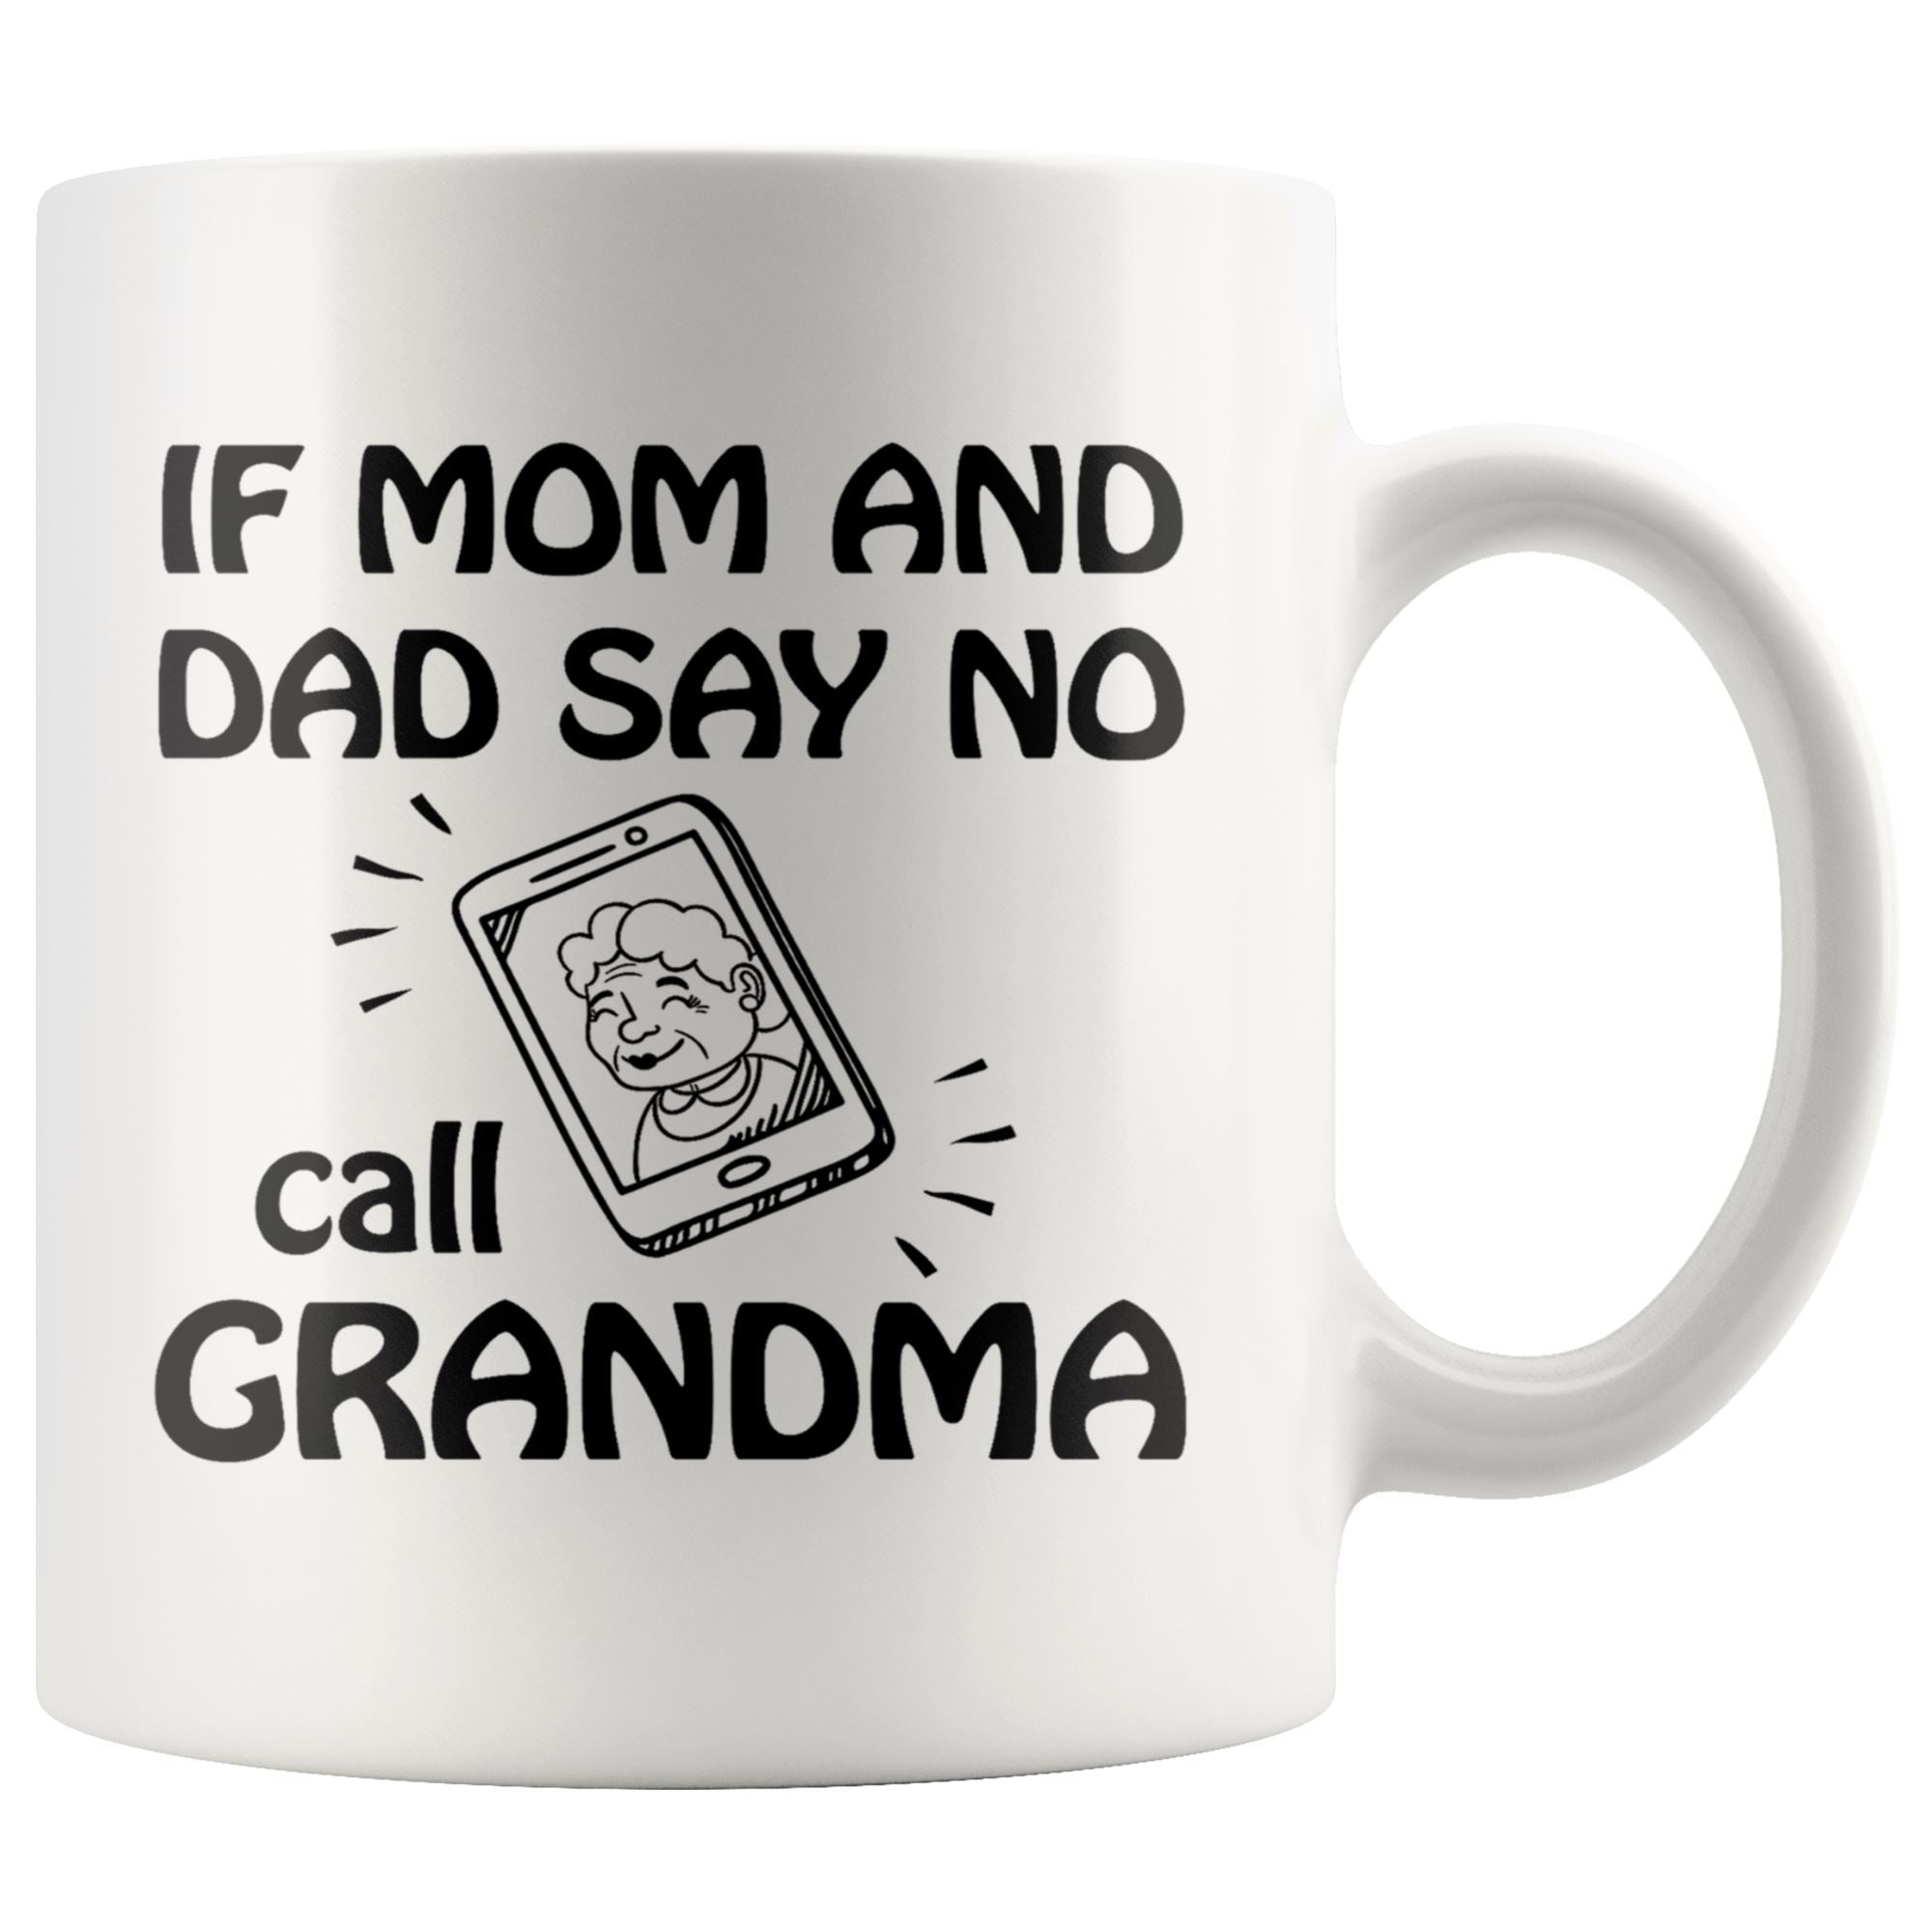 Call Grandma Drinkware teelaunch 11oz Mug 